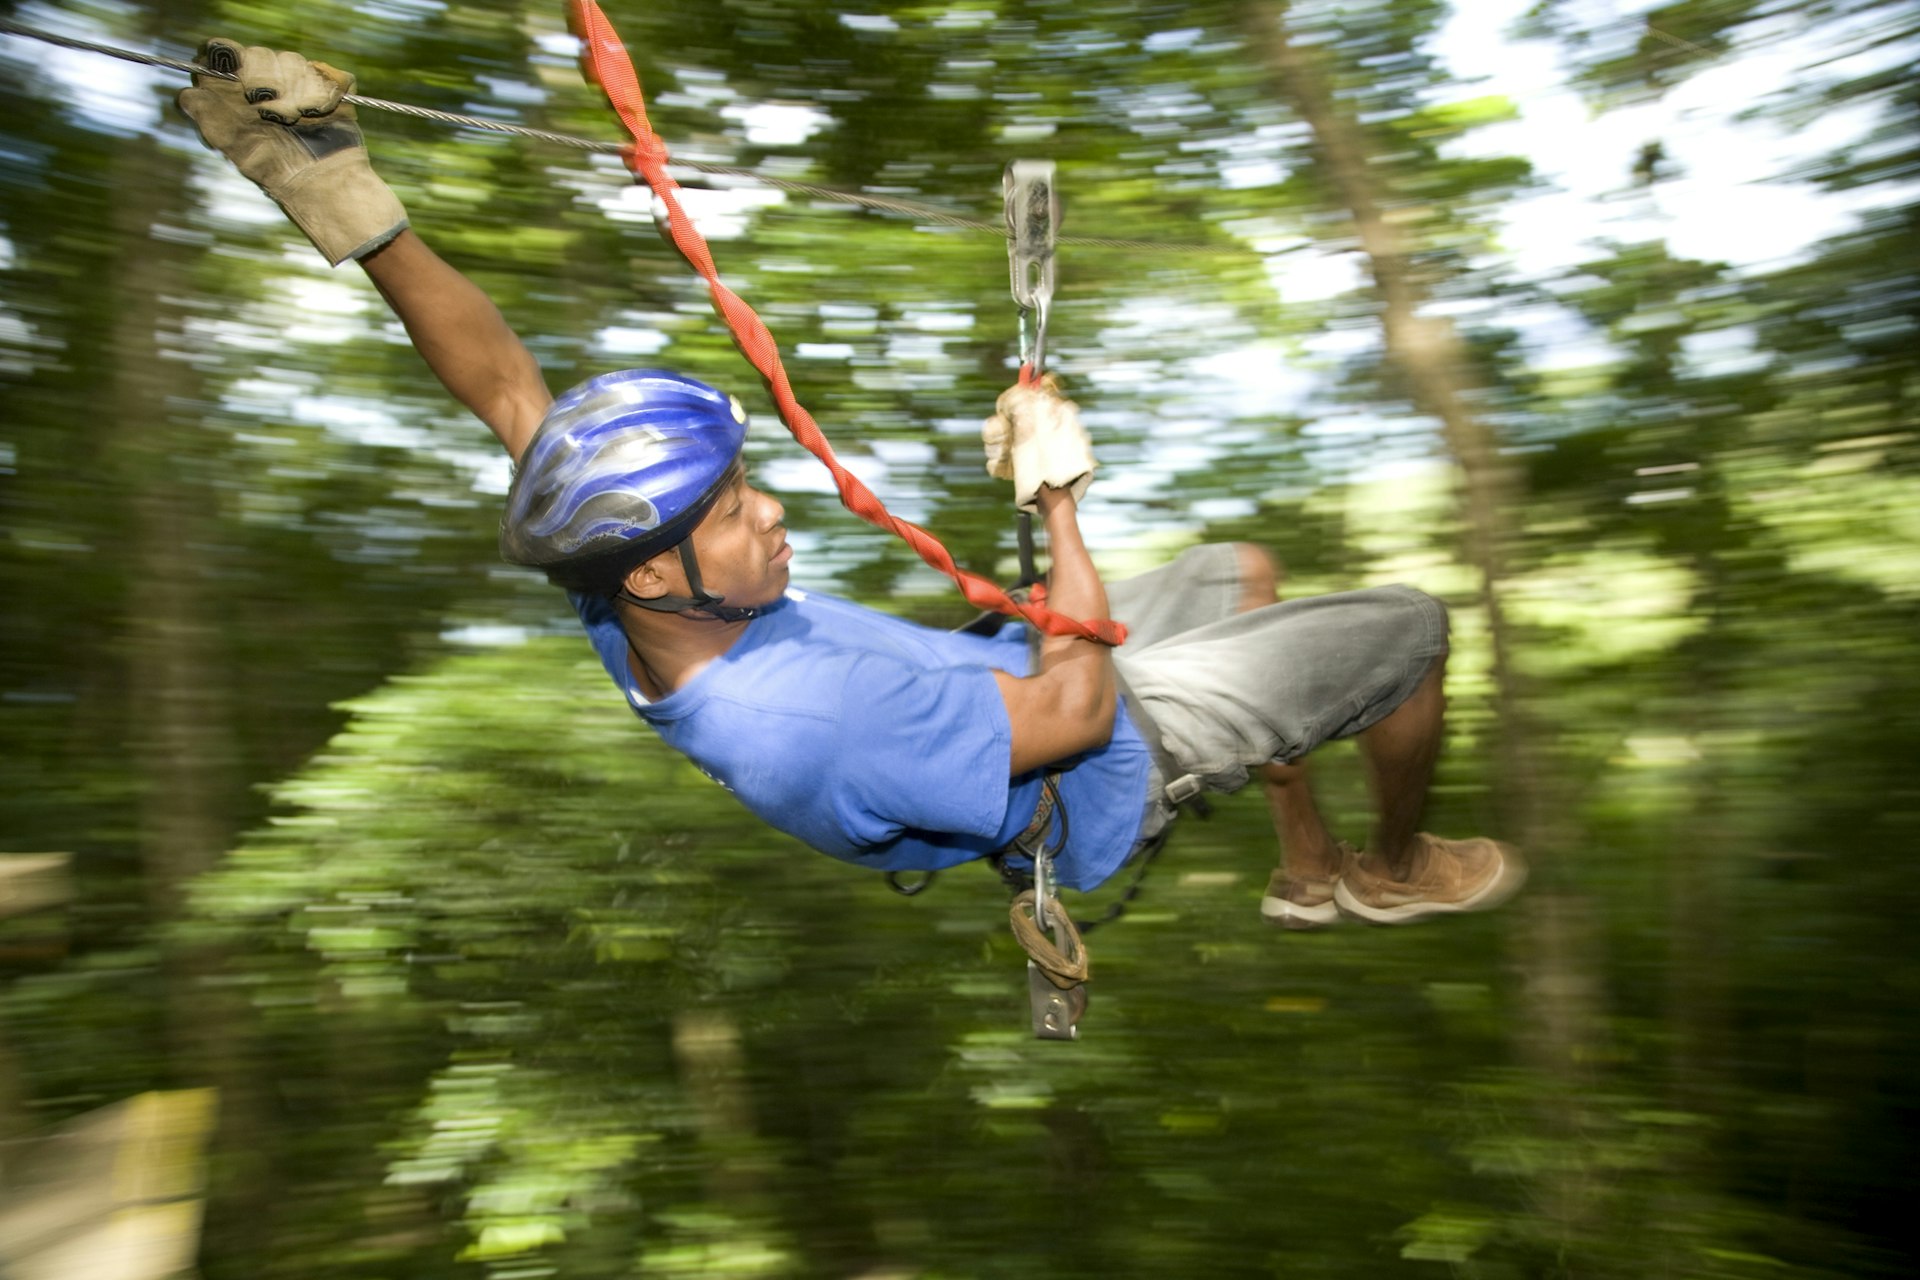 A Black man in a blue shirt, shorts and blue helmet ziplines through the Honduran rainforest